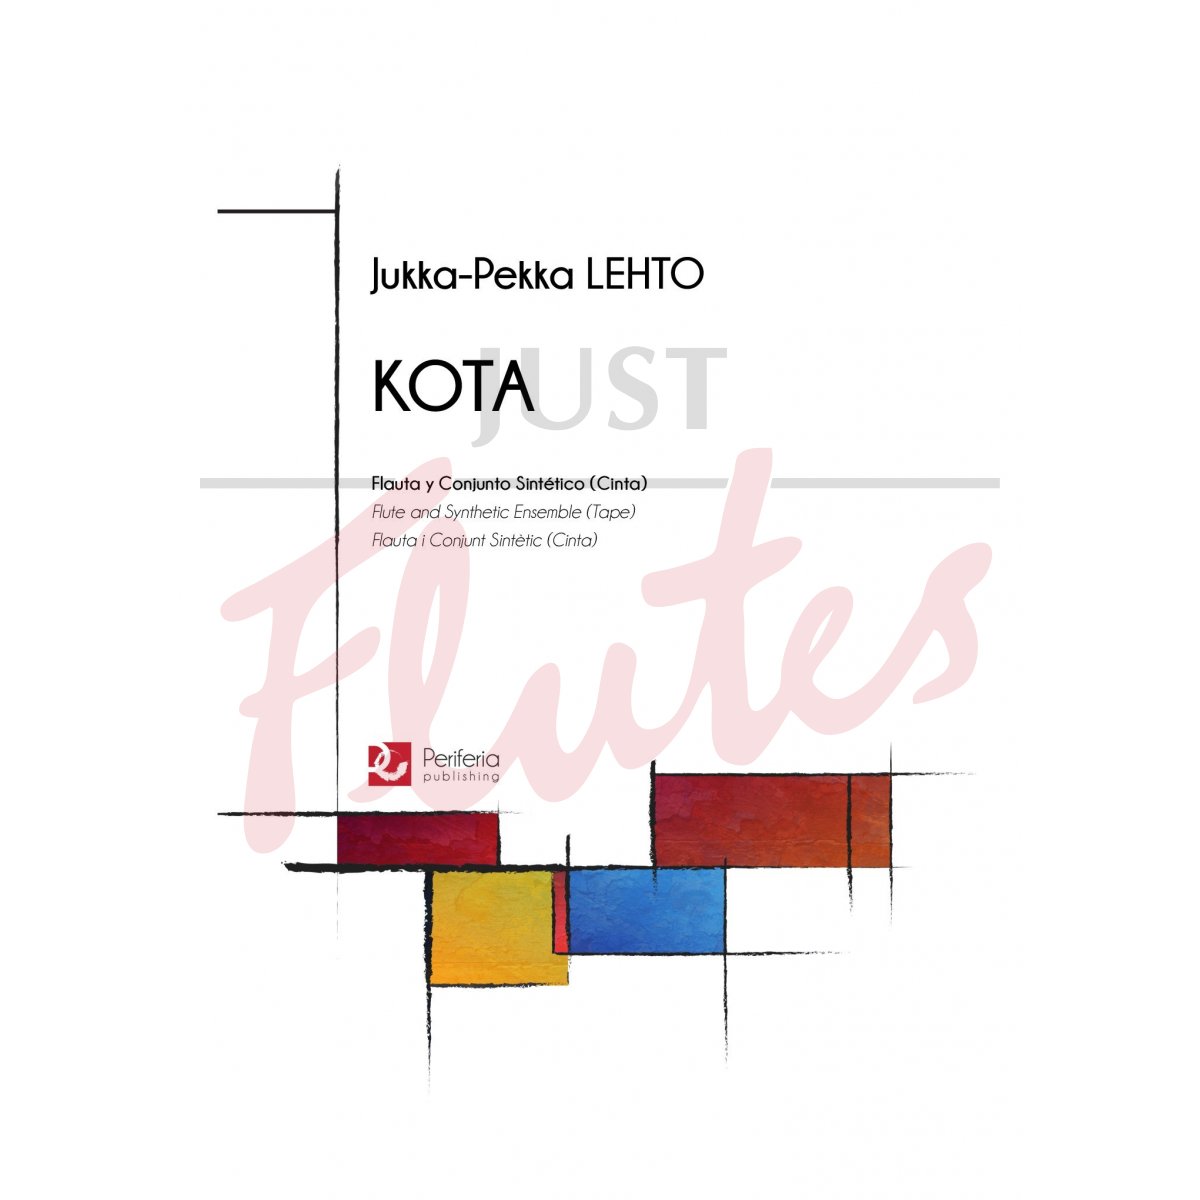 KOTA for Flute and Synthetic Ensemble (Tape)